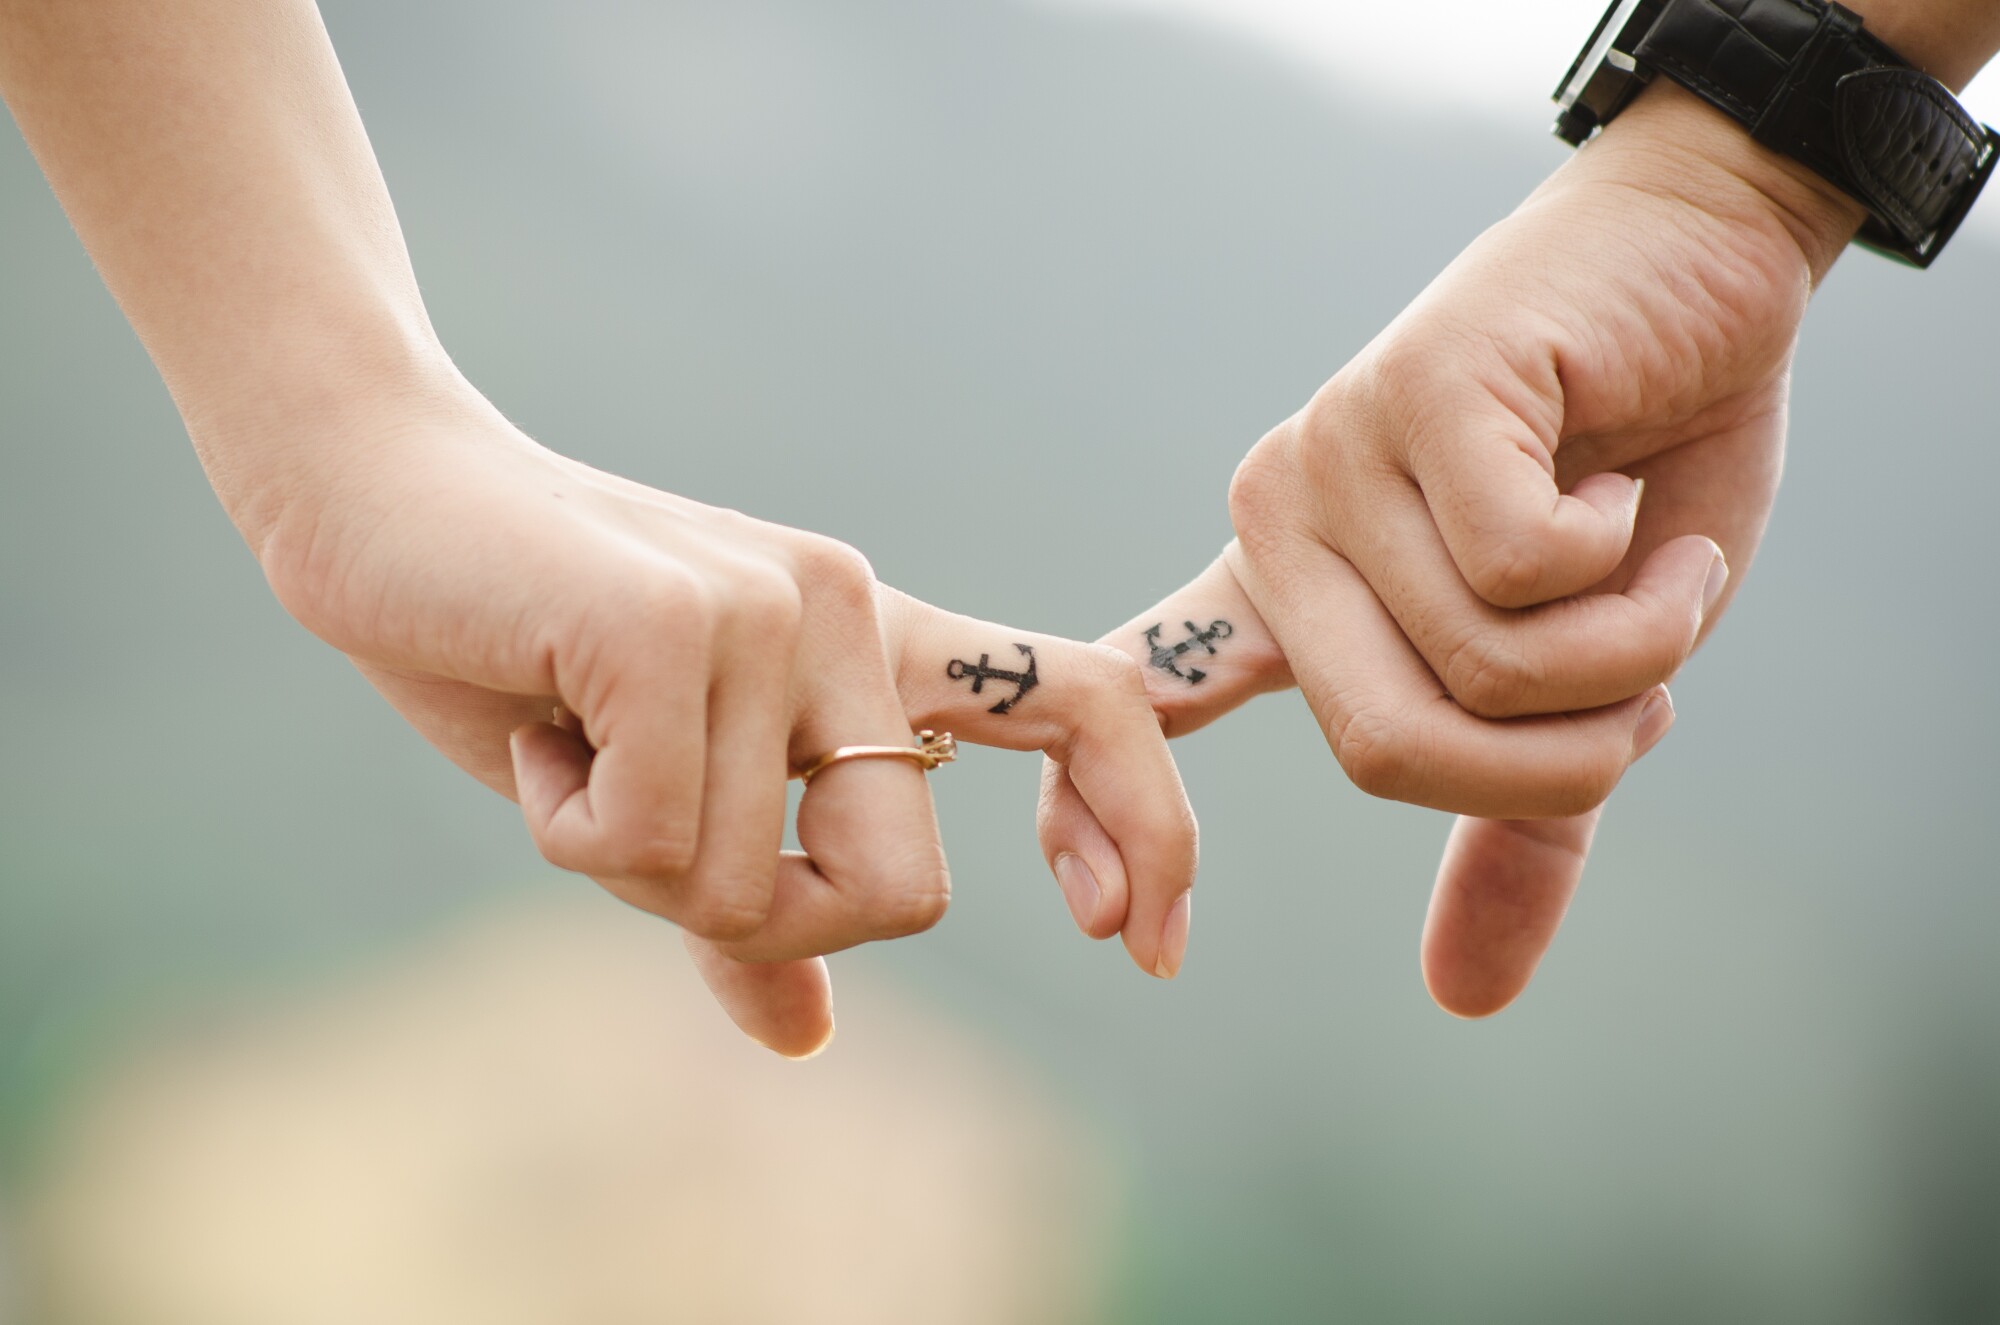 Matching wedding ring tattoos on fingers - Tattoogrid.net